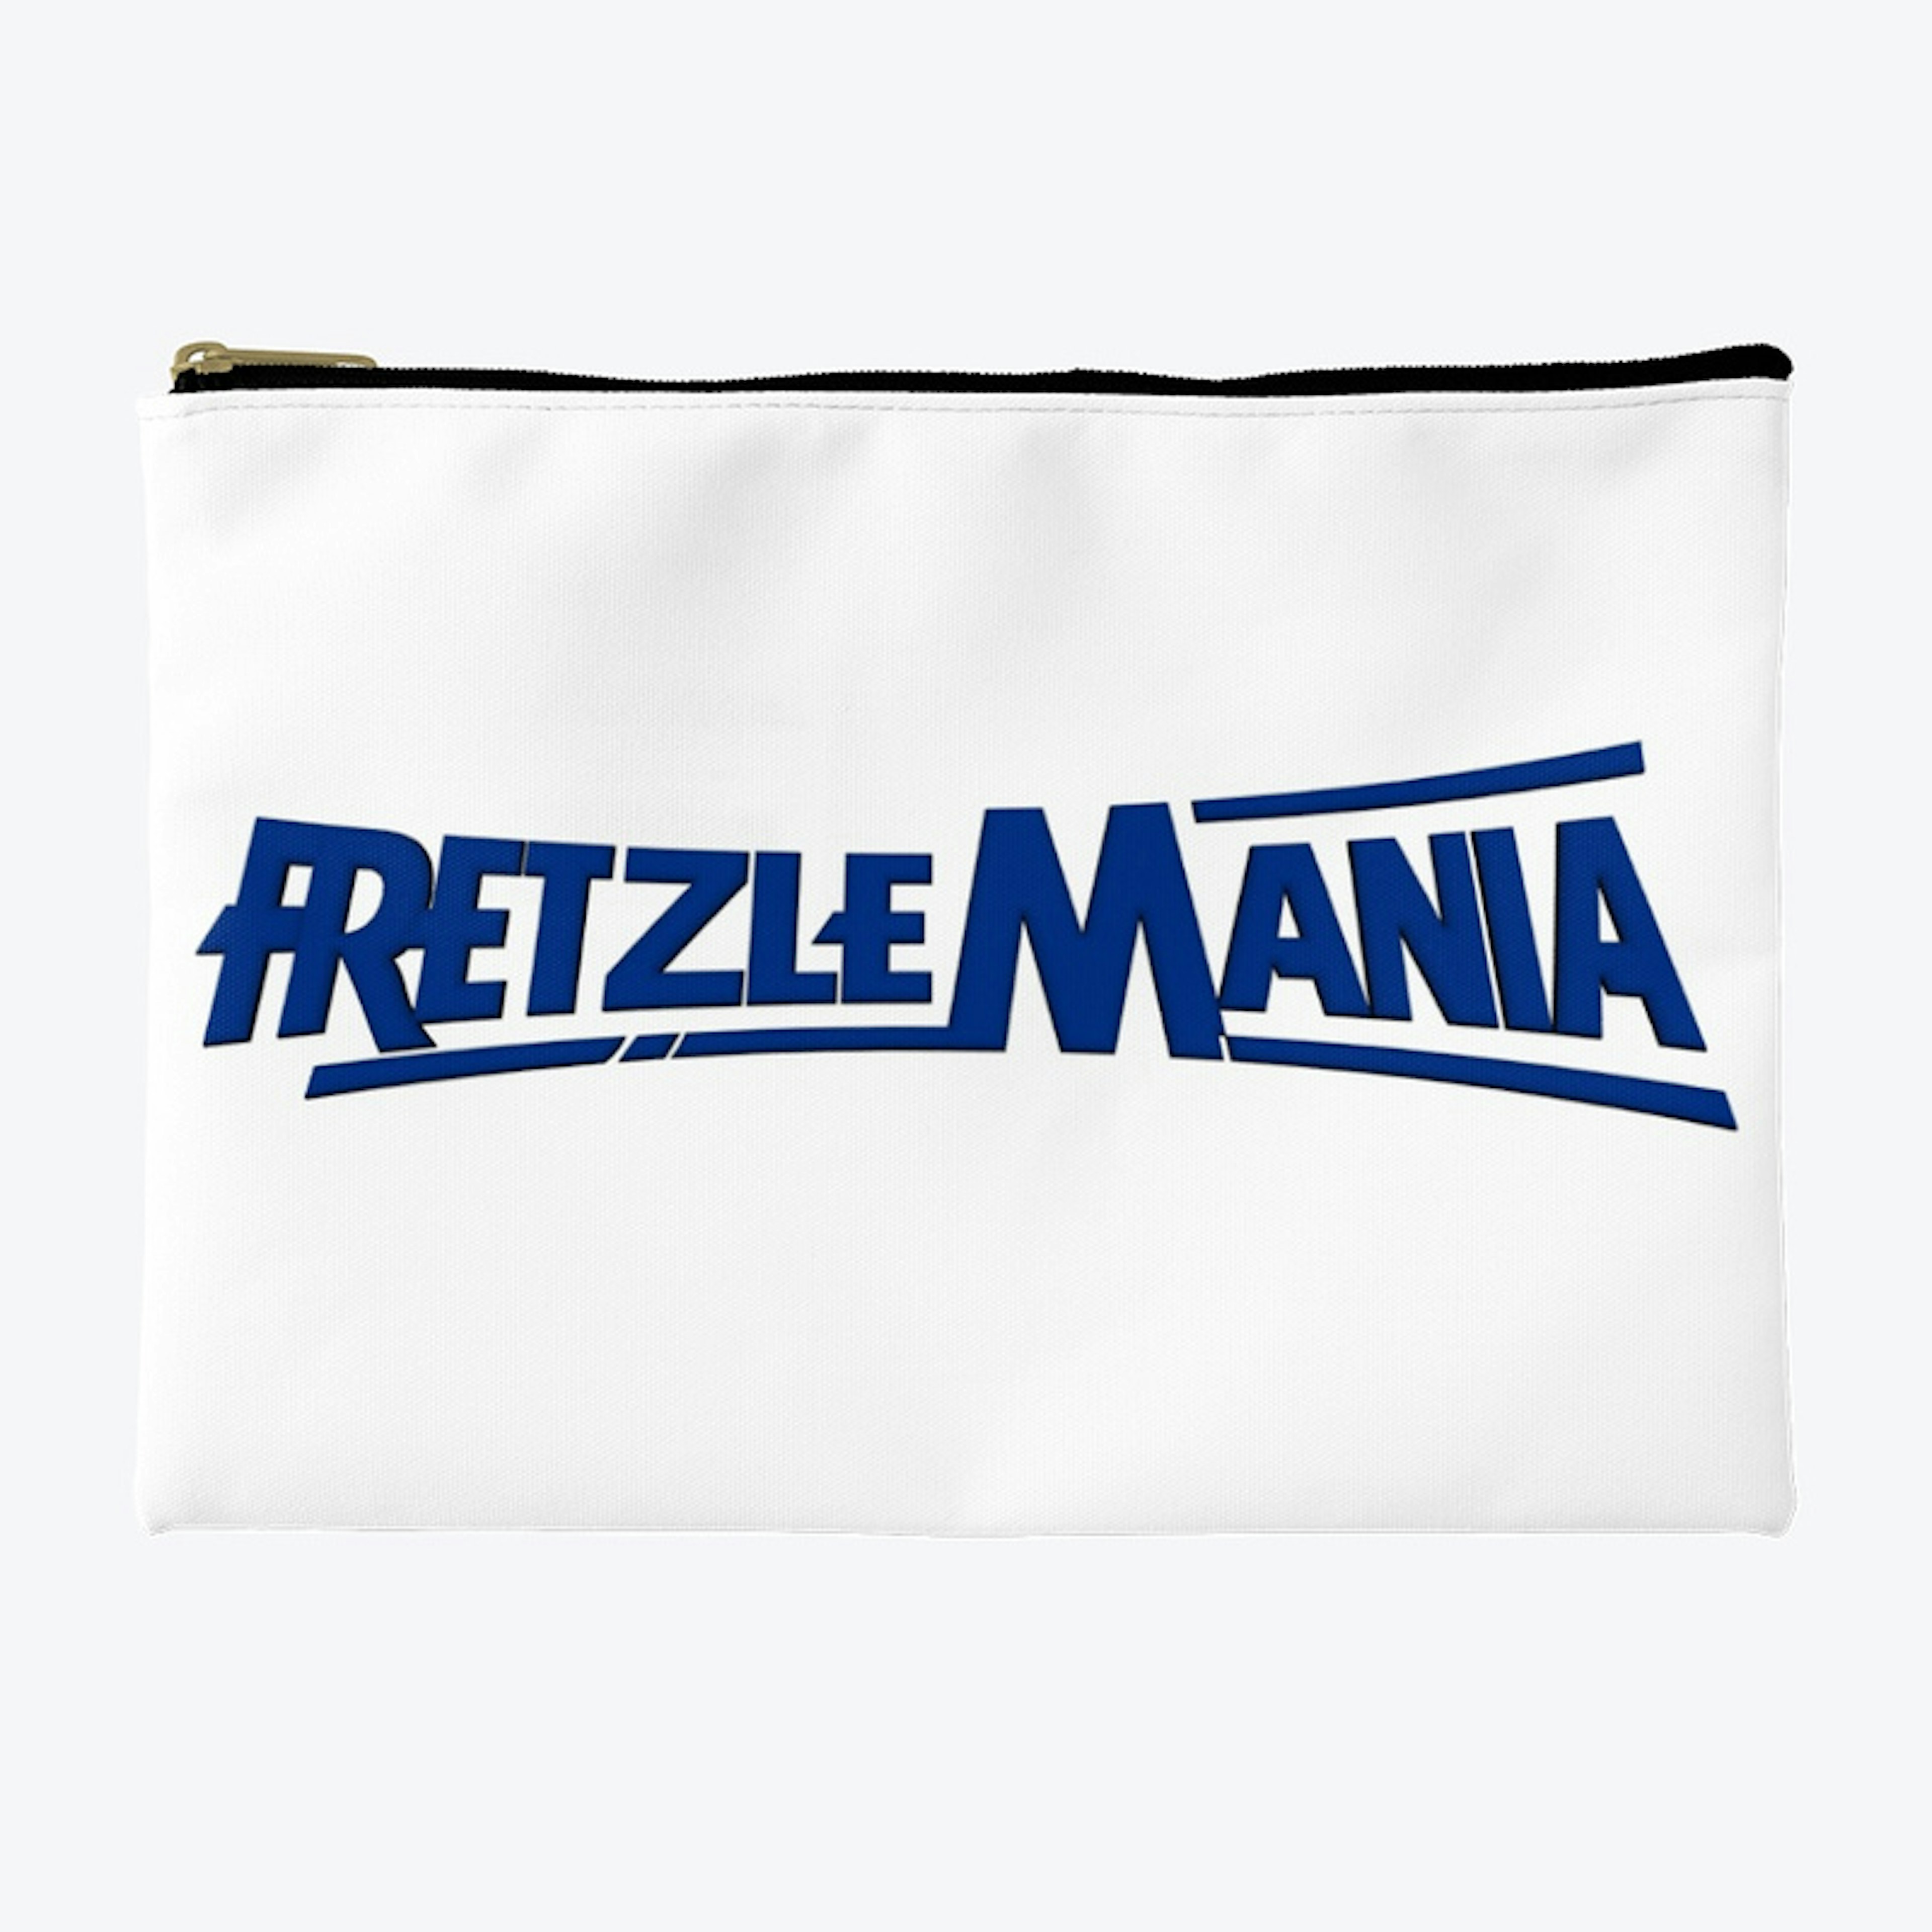 FretzleMania 2.0 Accessories Collection